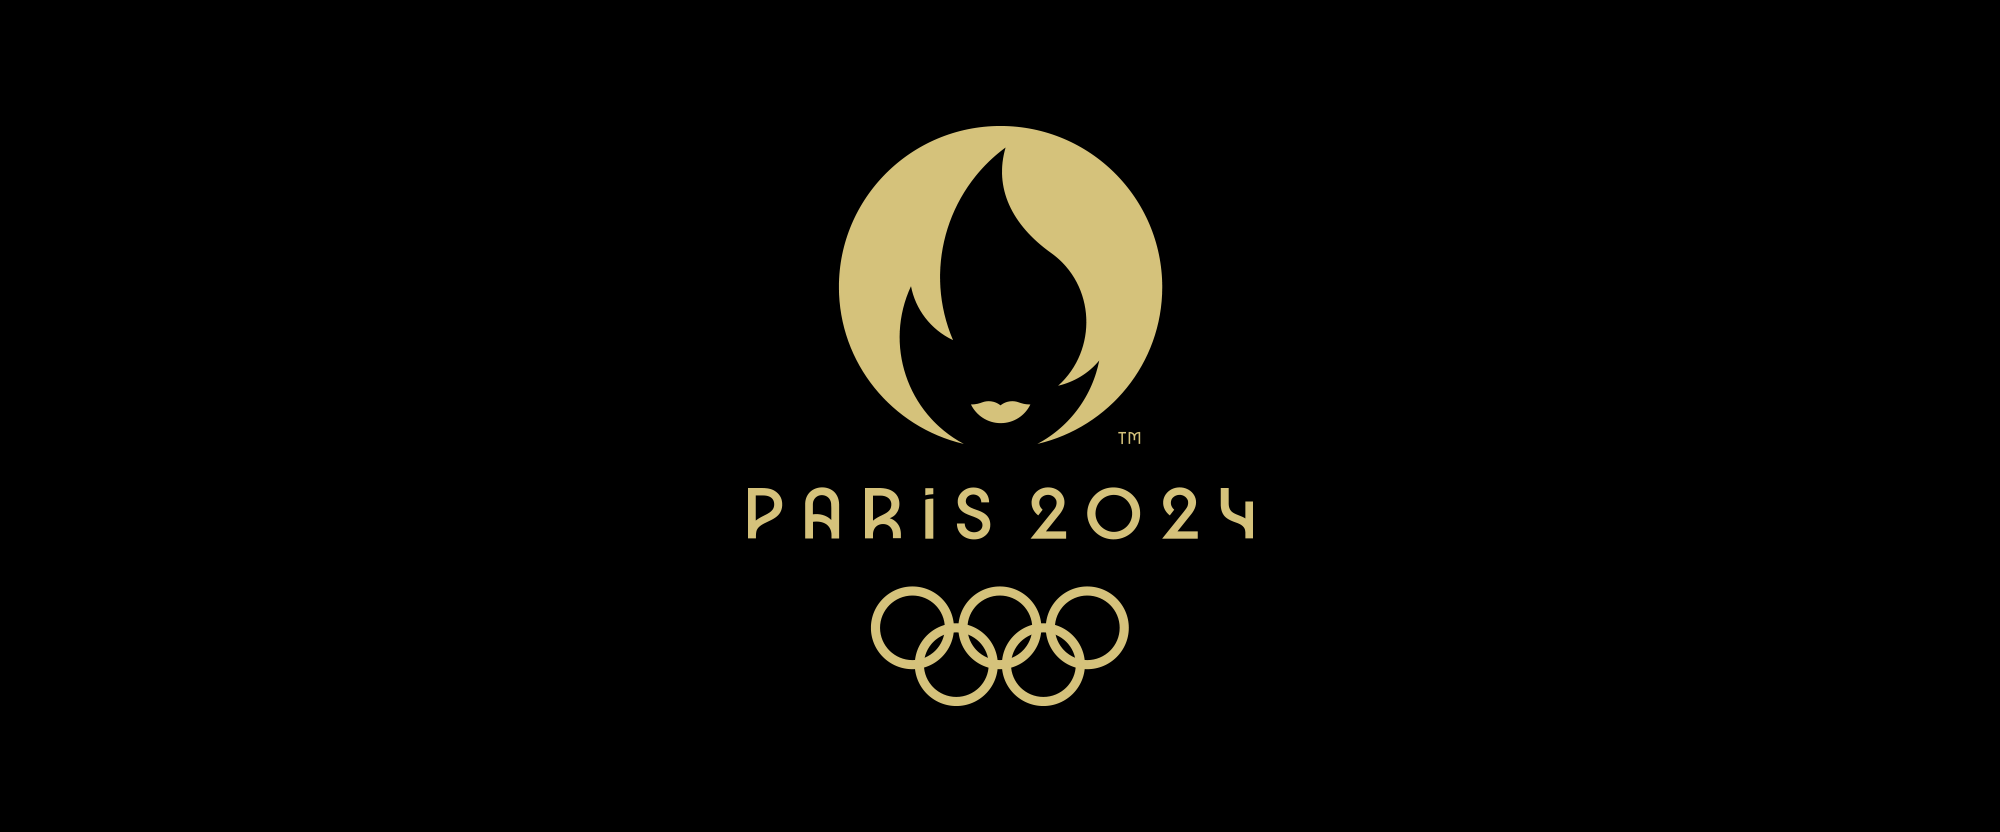 paris2024 official logo new